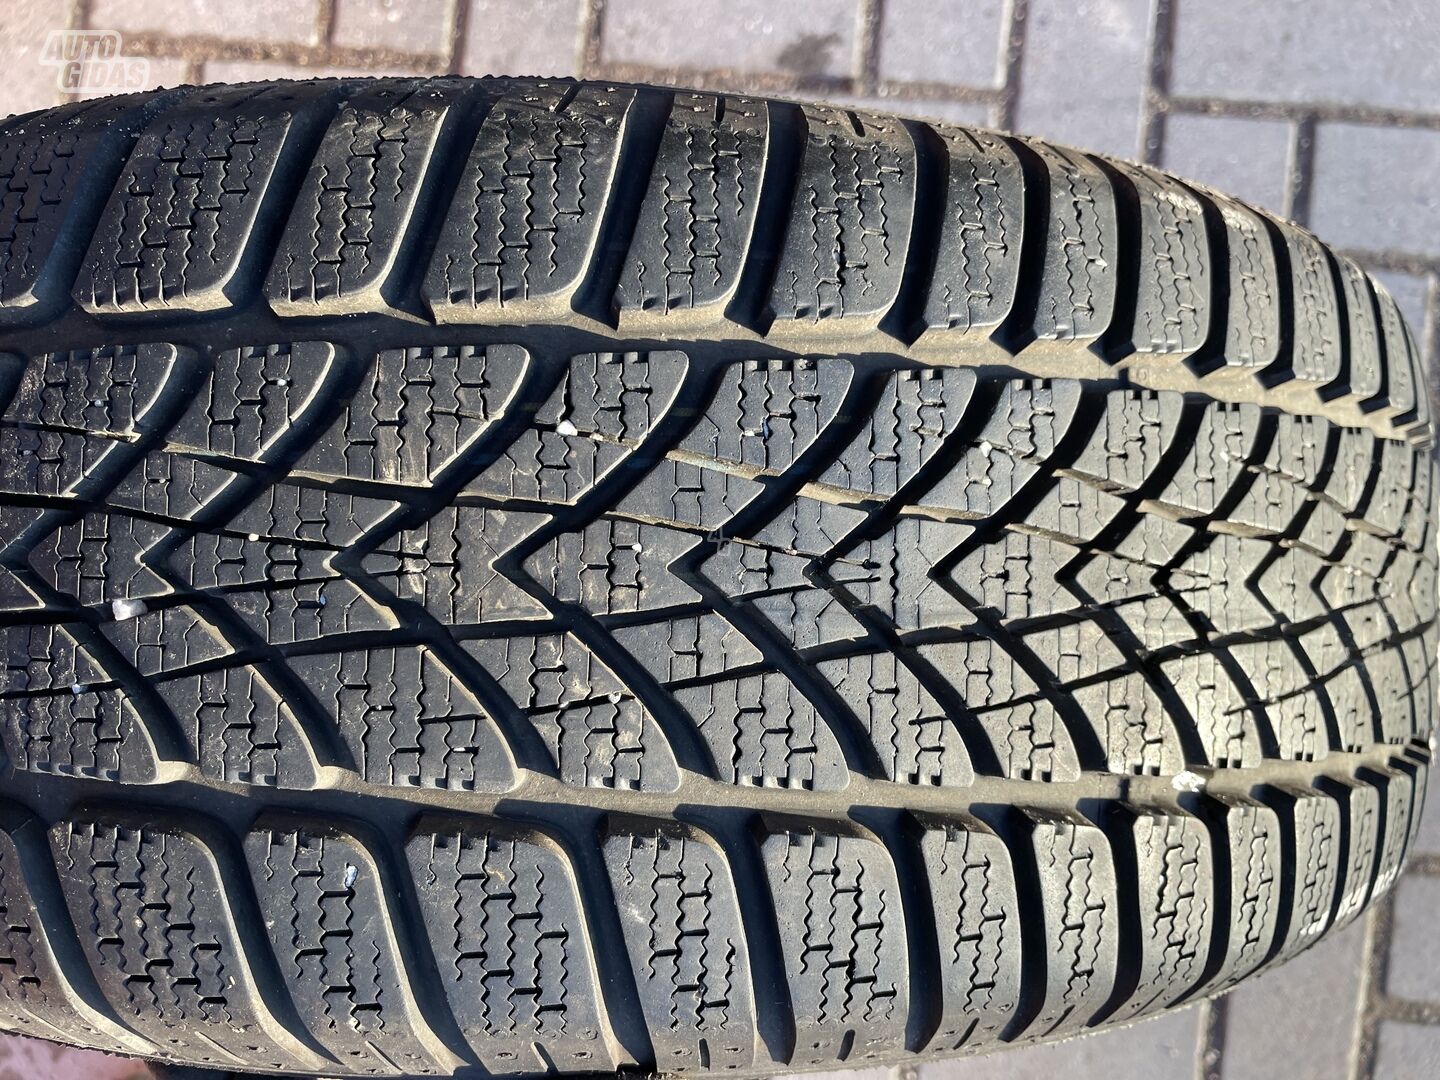 Dunlop R16 winter tyres passanger car